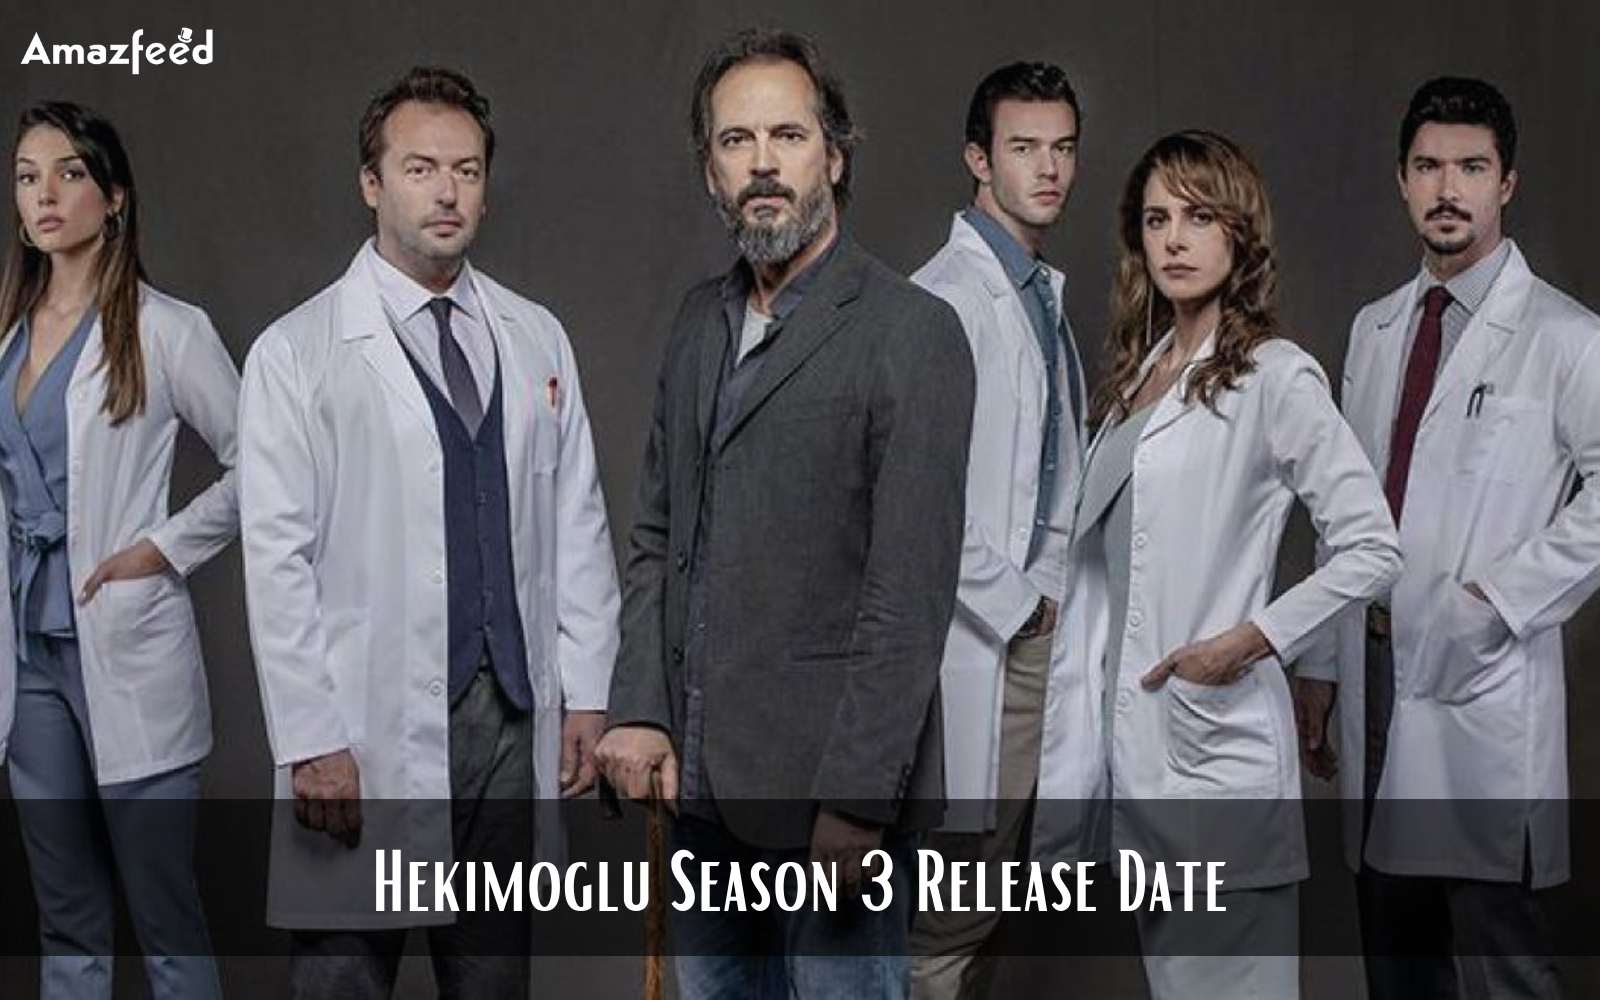 Hekimoglu season 3 release date